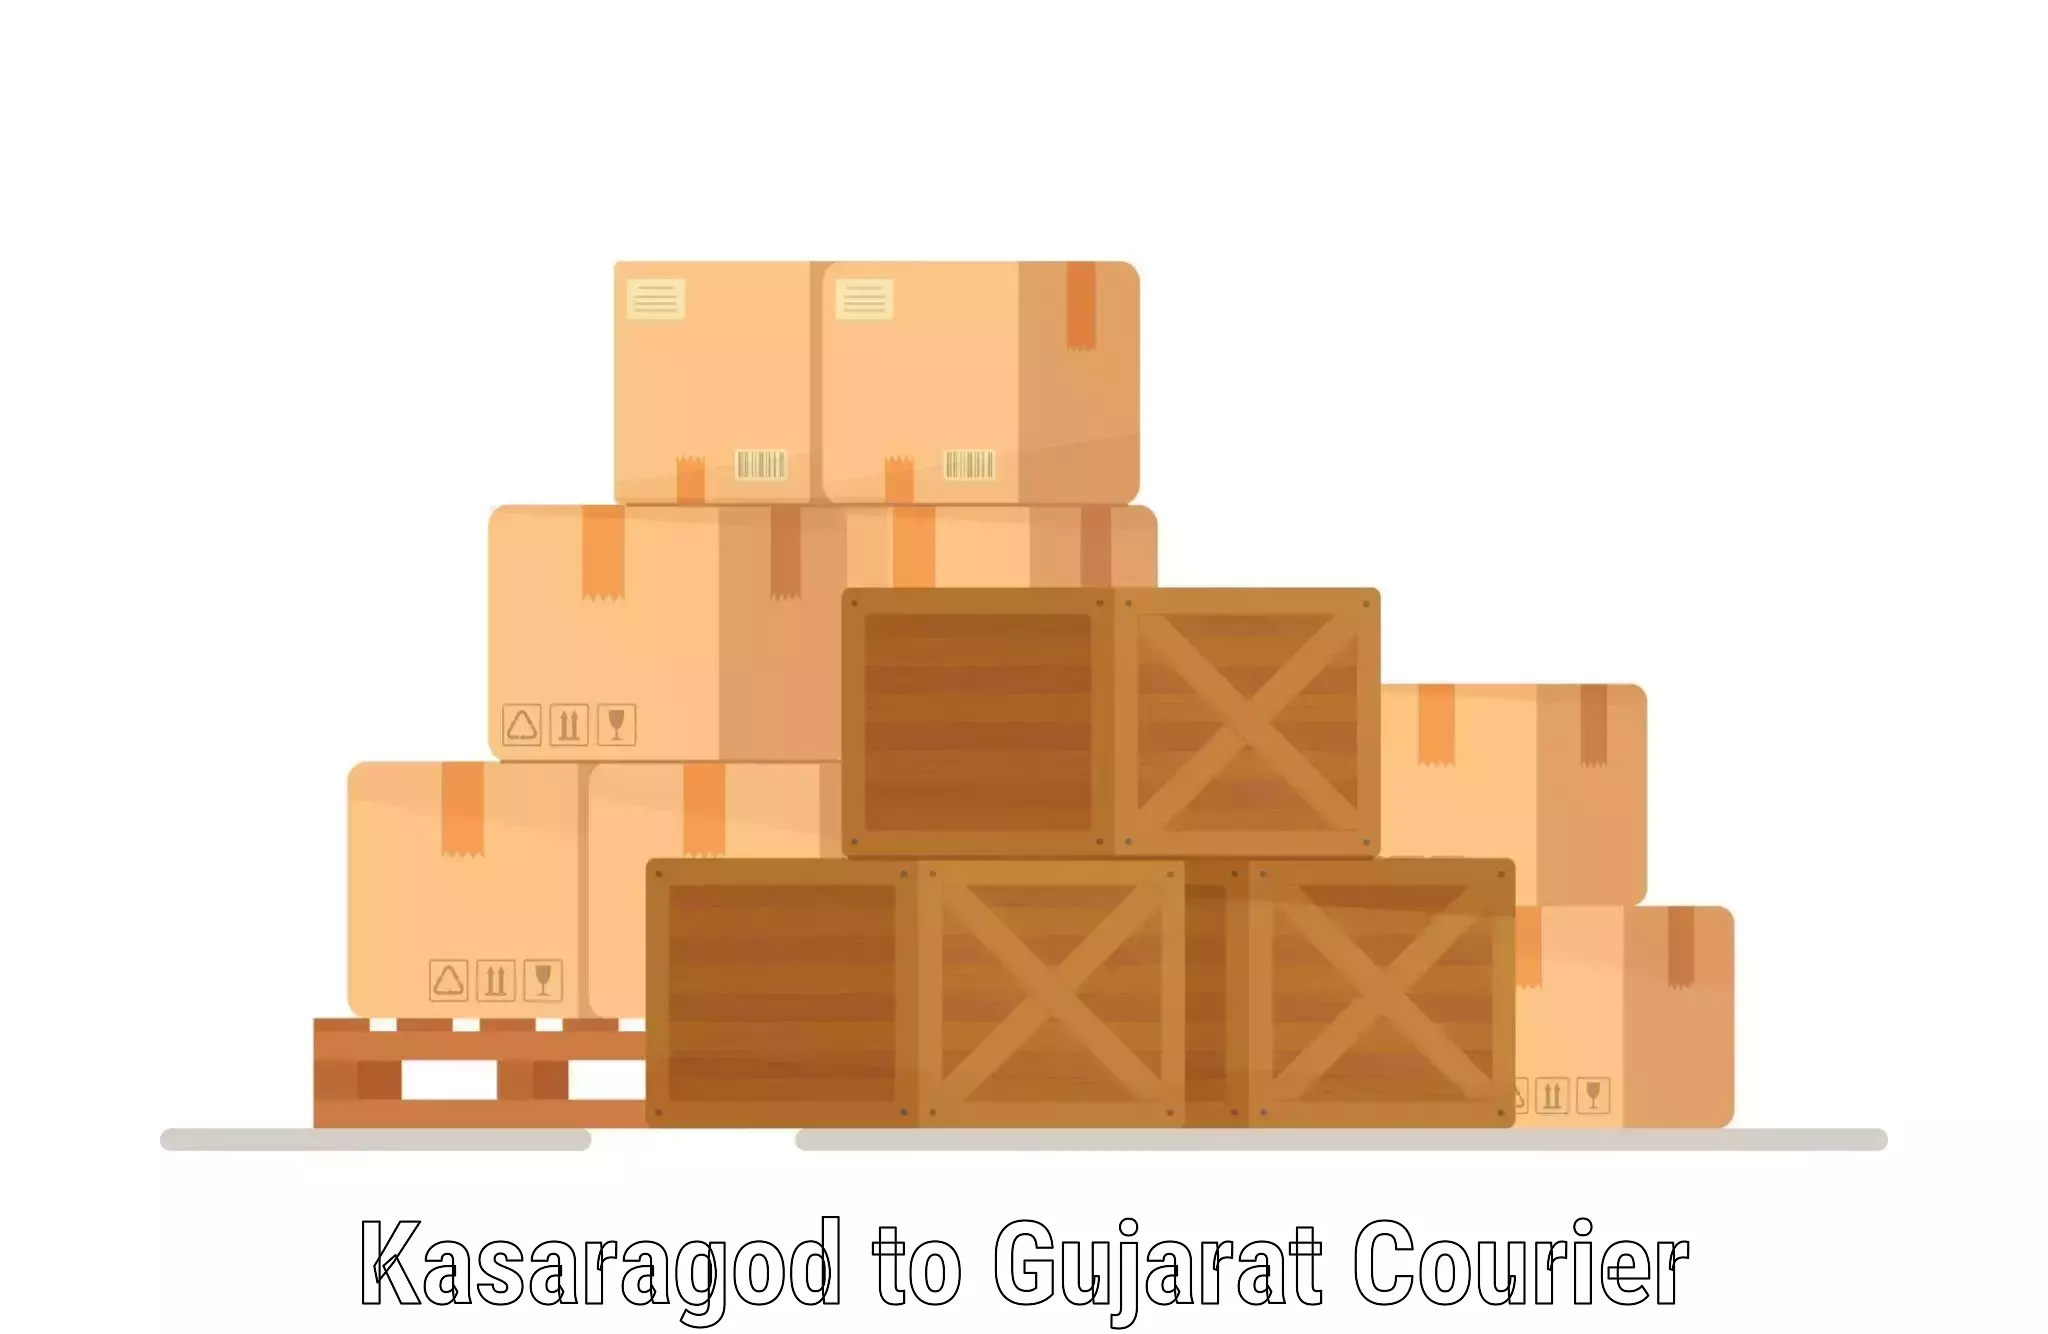 State-of-the-art courier technology Kasaragod to Kadodara